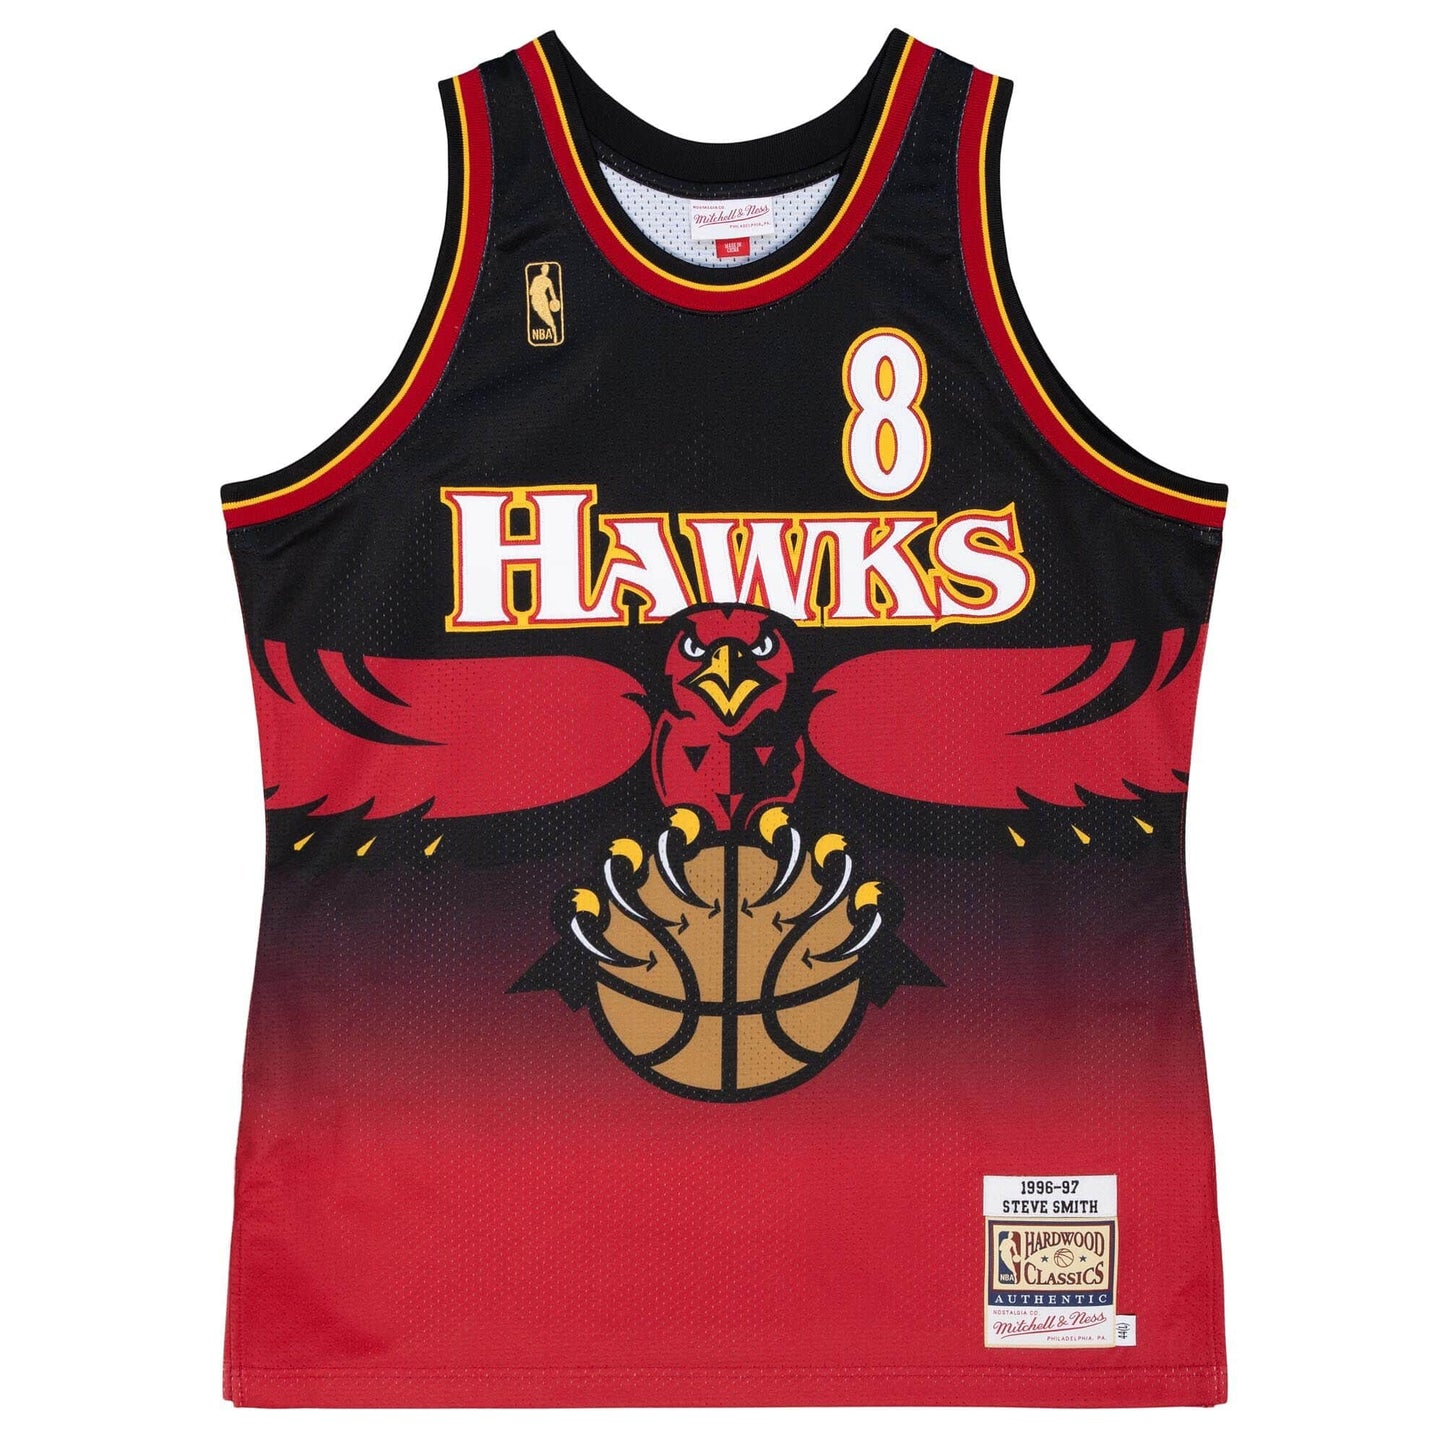 Authentic Steve Smith Atlanta Hawks 1996-97 Jersey